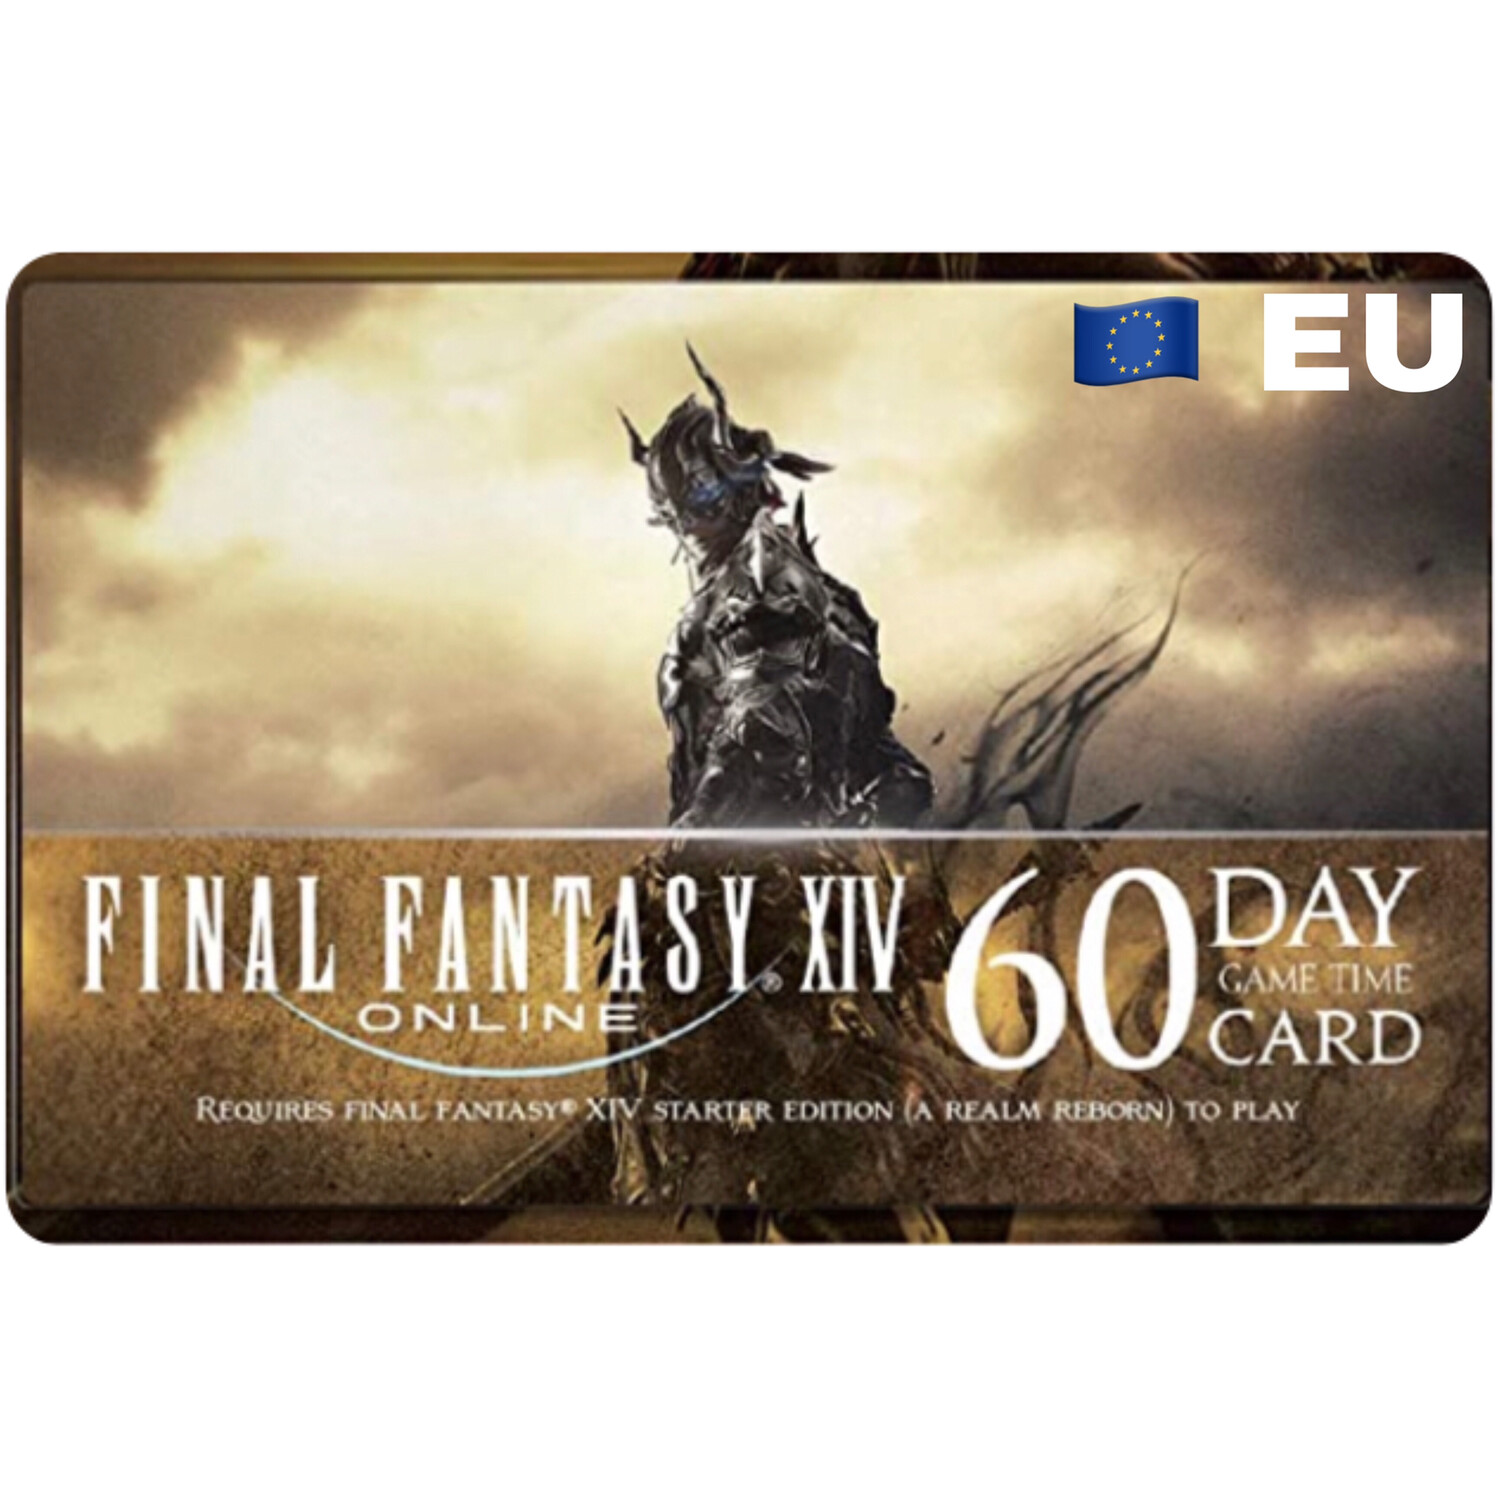 Final Fantasy XIV Online: 60 Day Time Cards EU